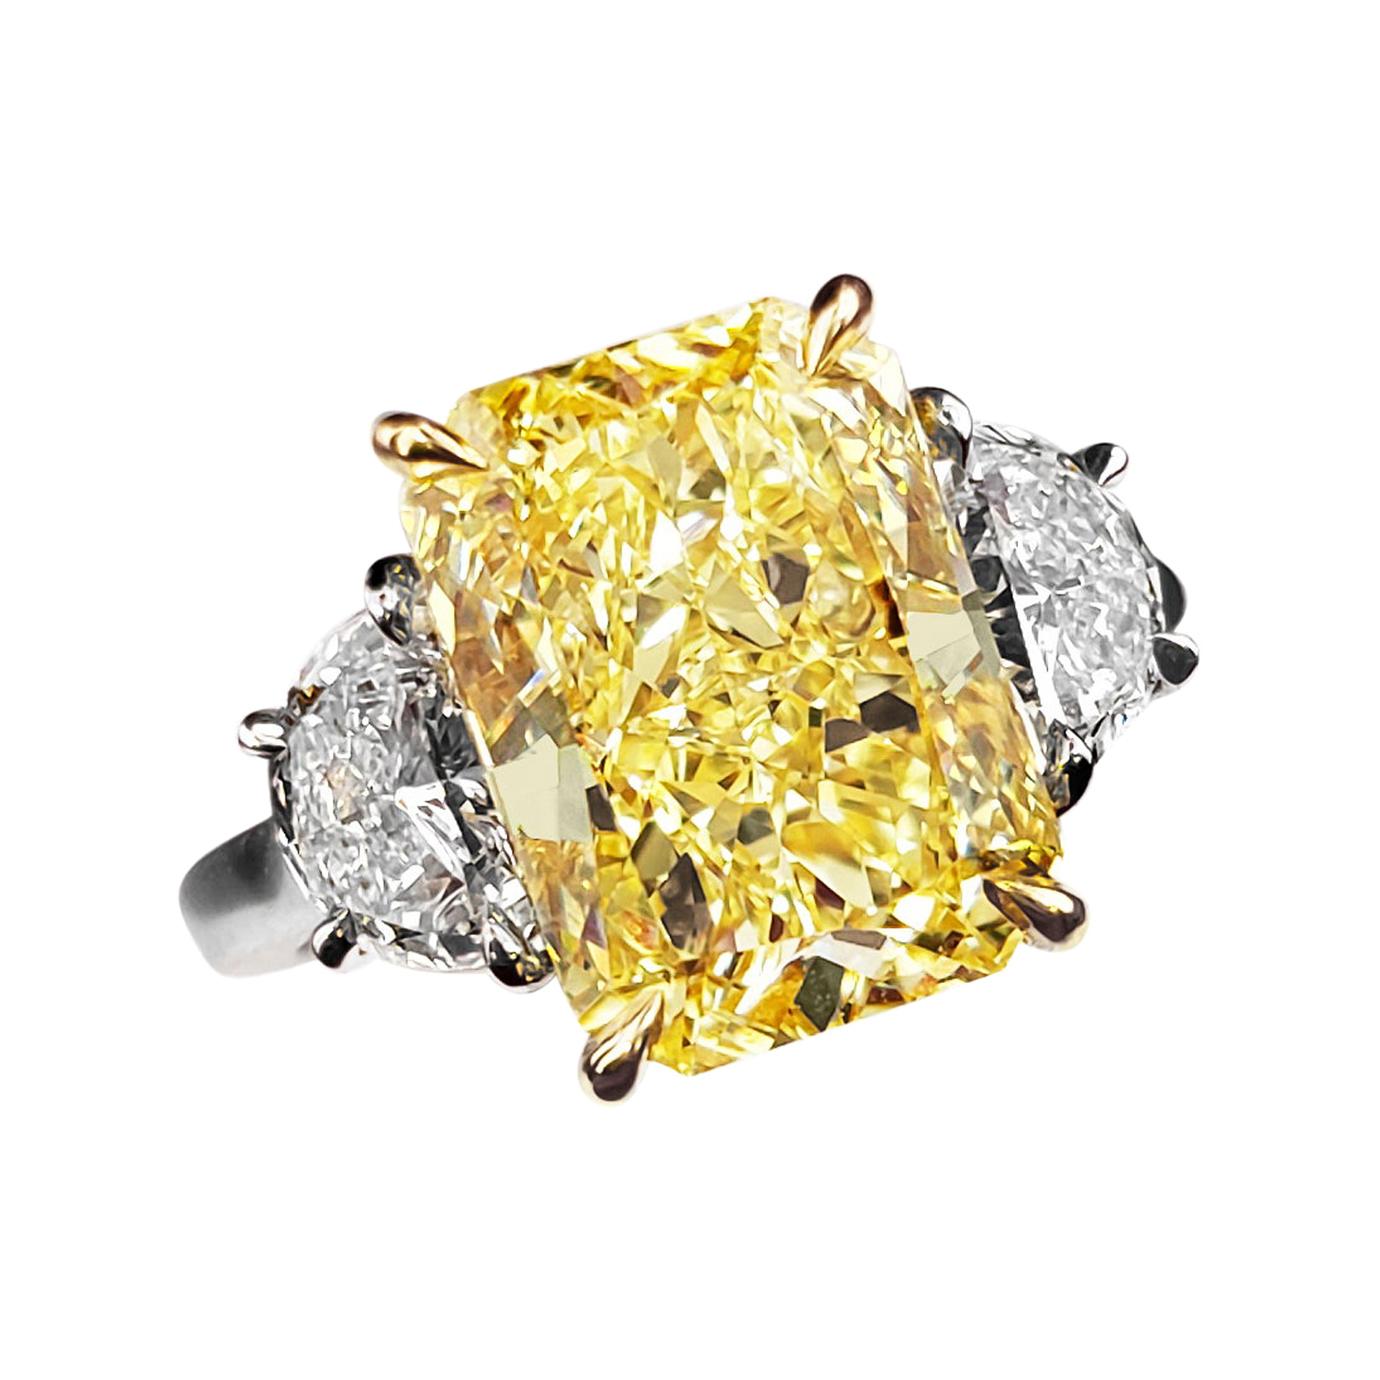 Scarselli 5 Carat Fancy Intense Yellow Diamond Ring in Platinum GIA Certified